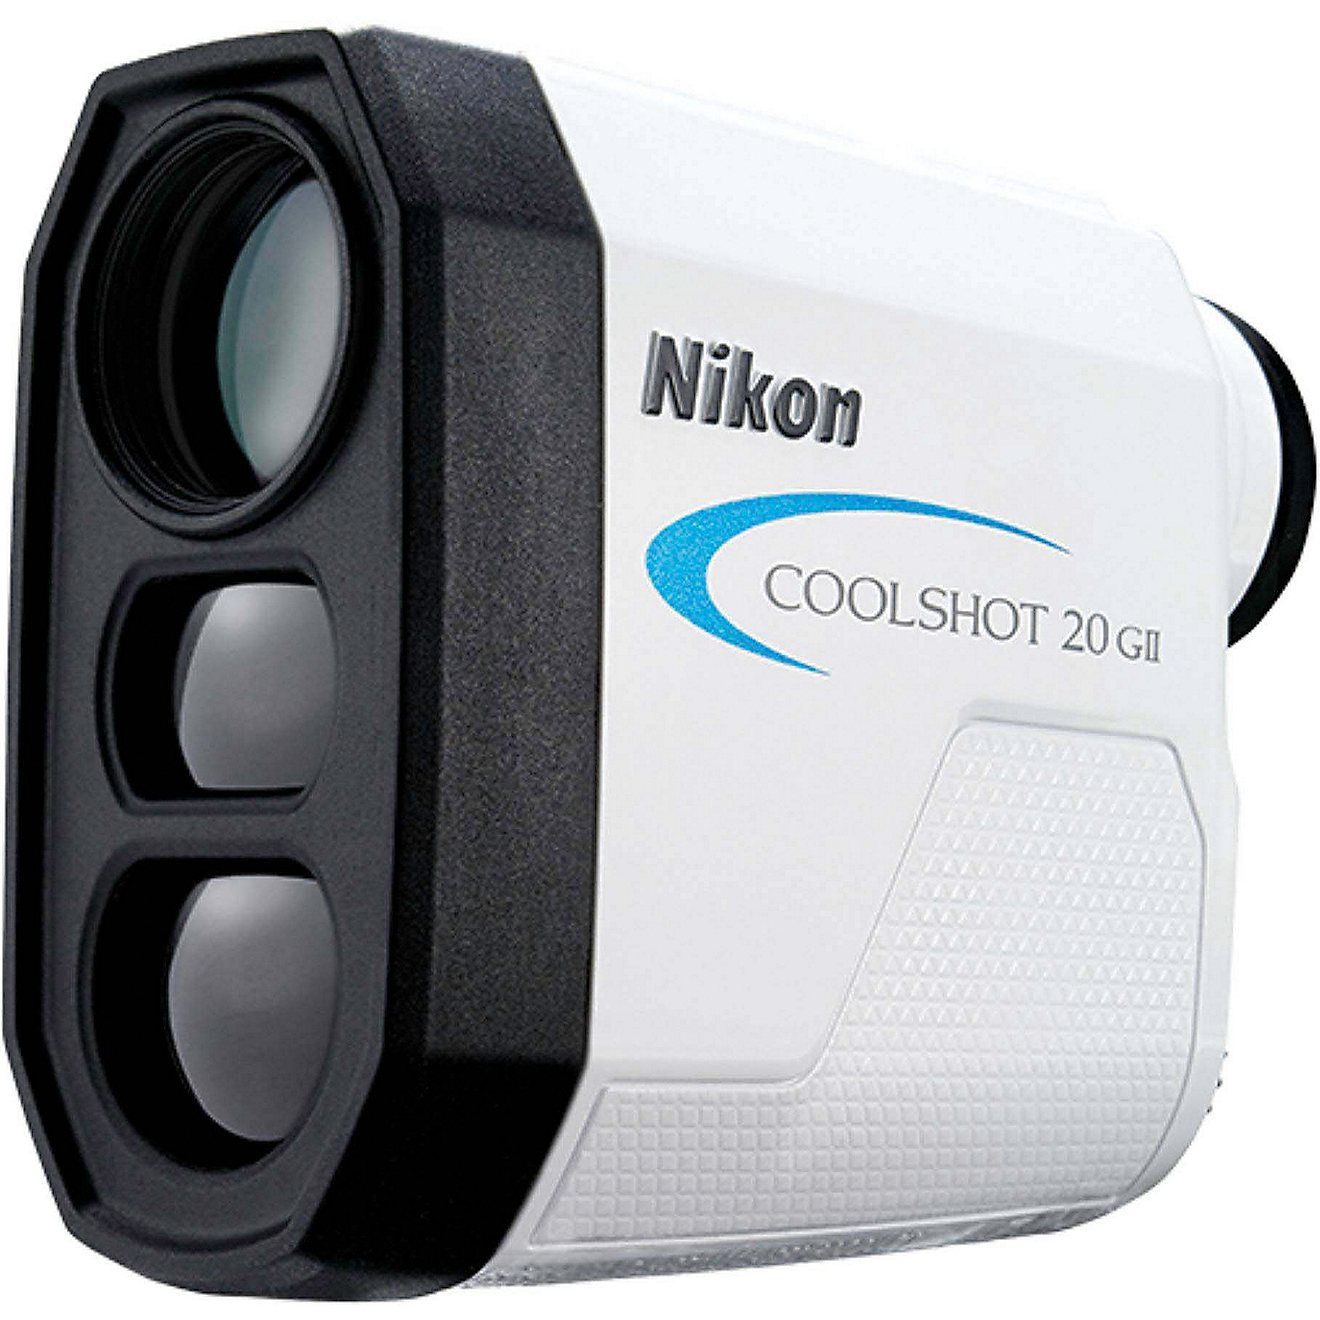 Nikon COOLSHOT 20 GII Golf Laser Range Finder | Academy | Academy Sports + Outdoors